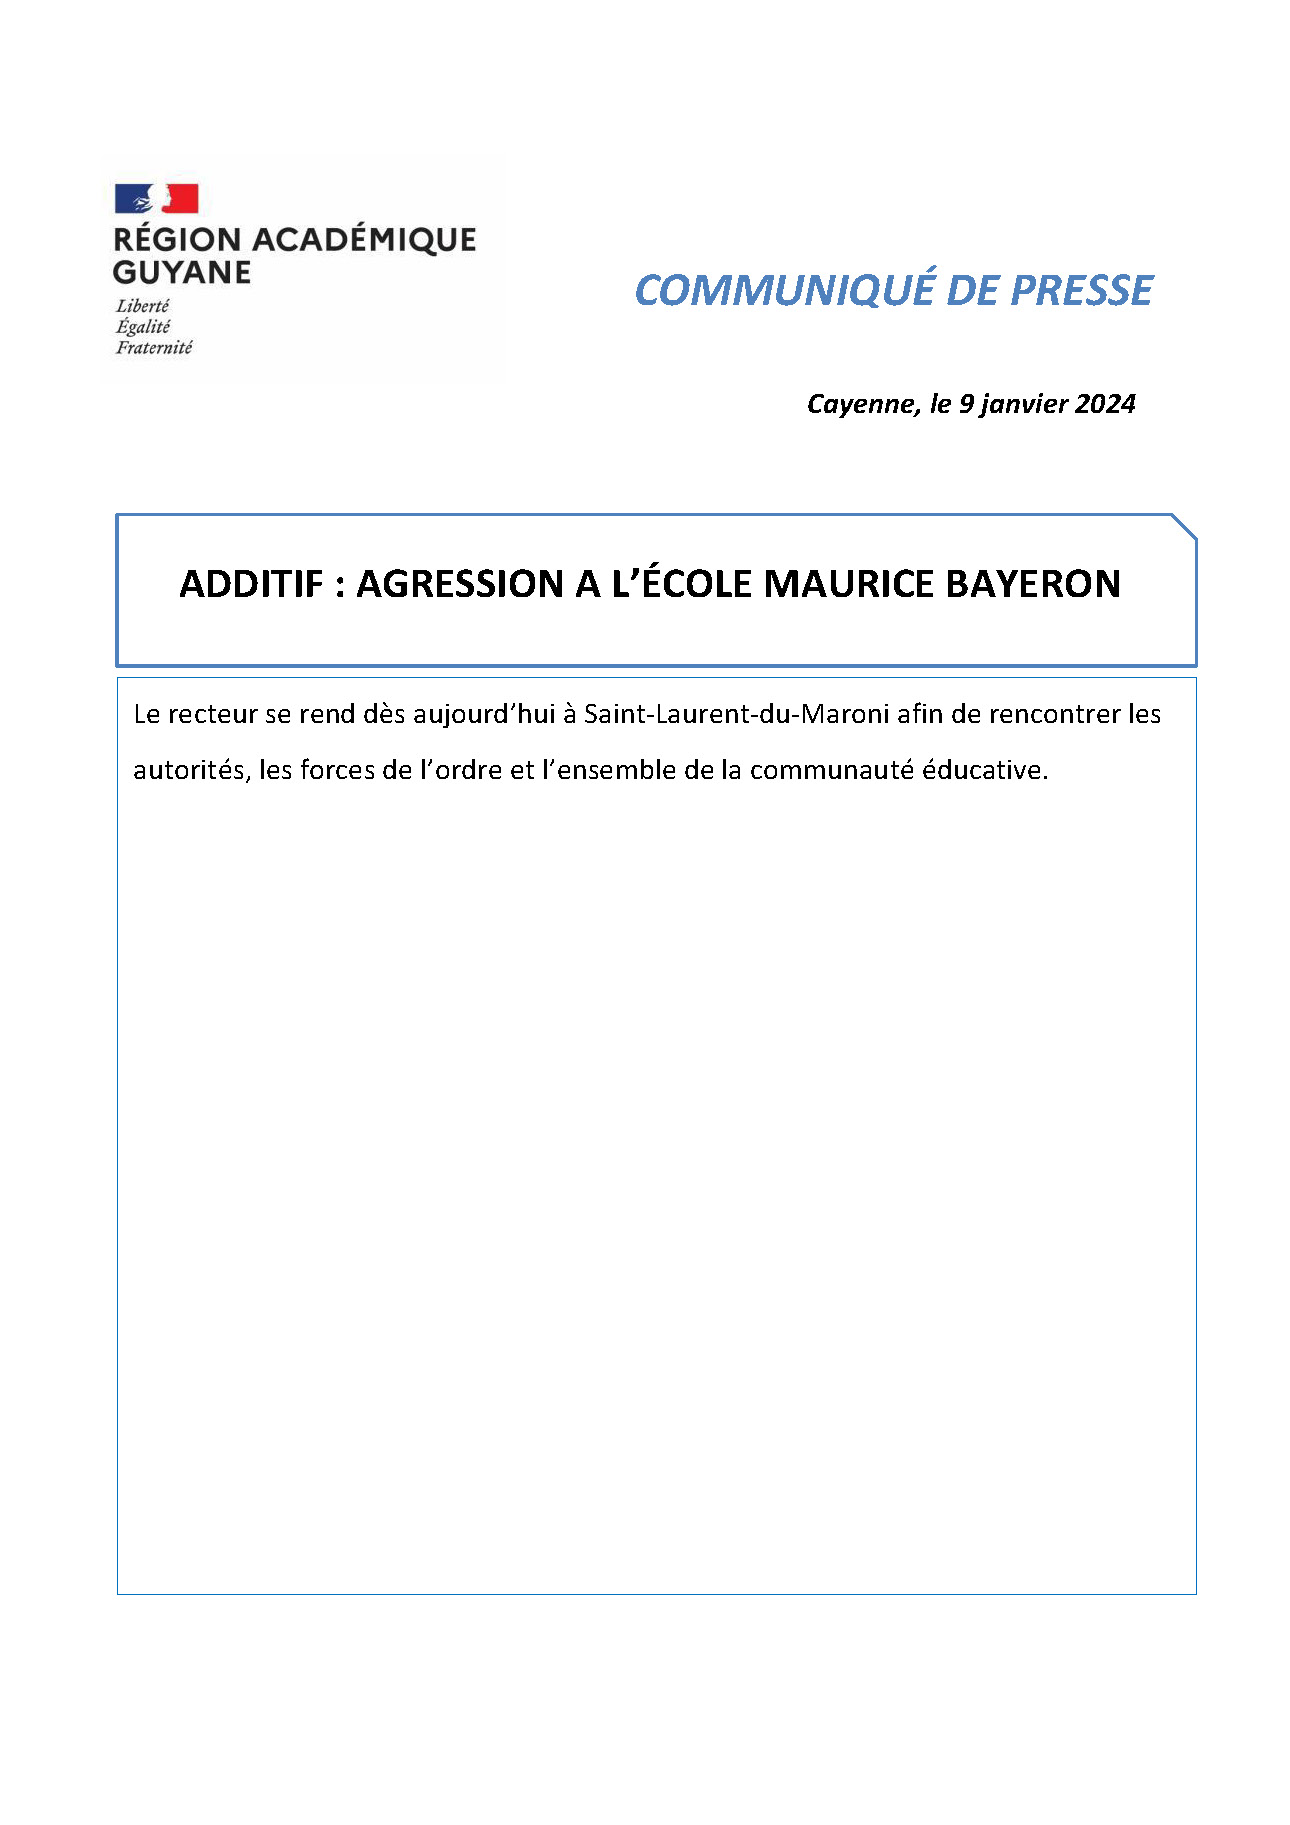 [CP] - Additif : Agression à l'école Maurice Bayeron